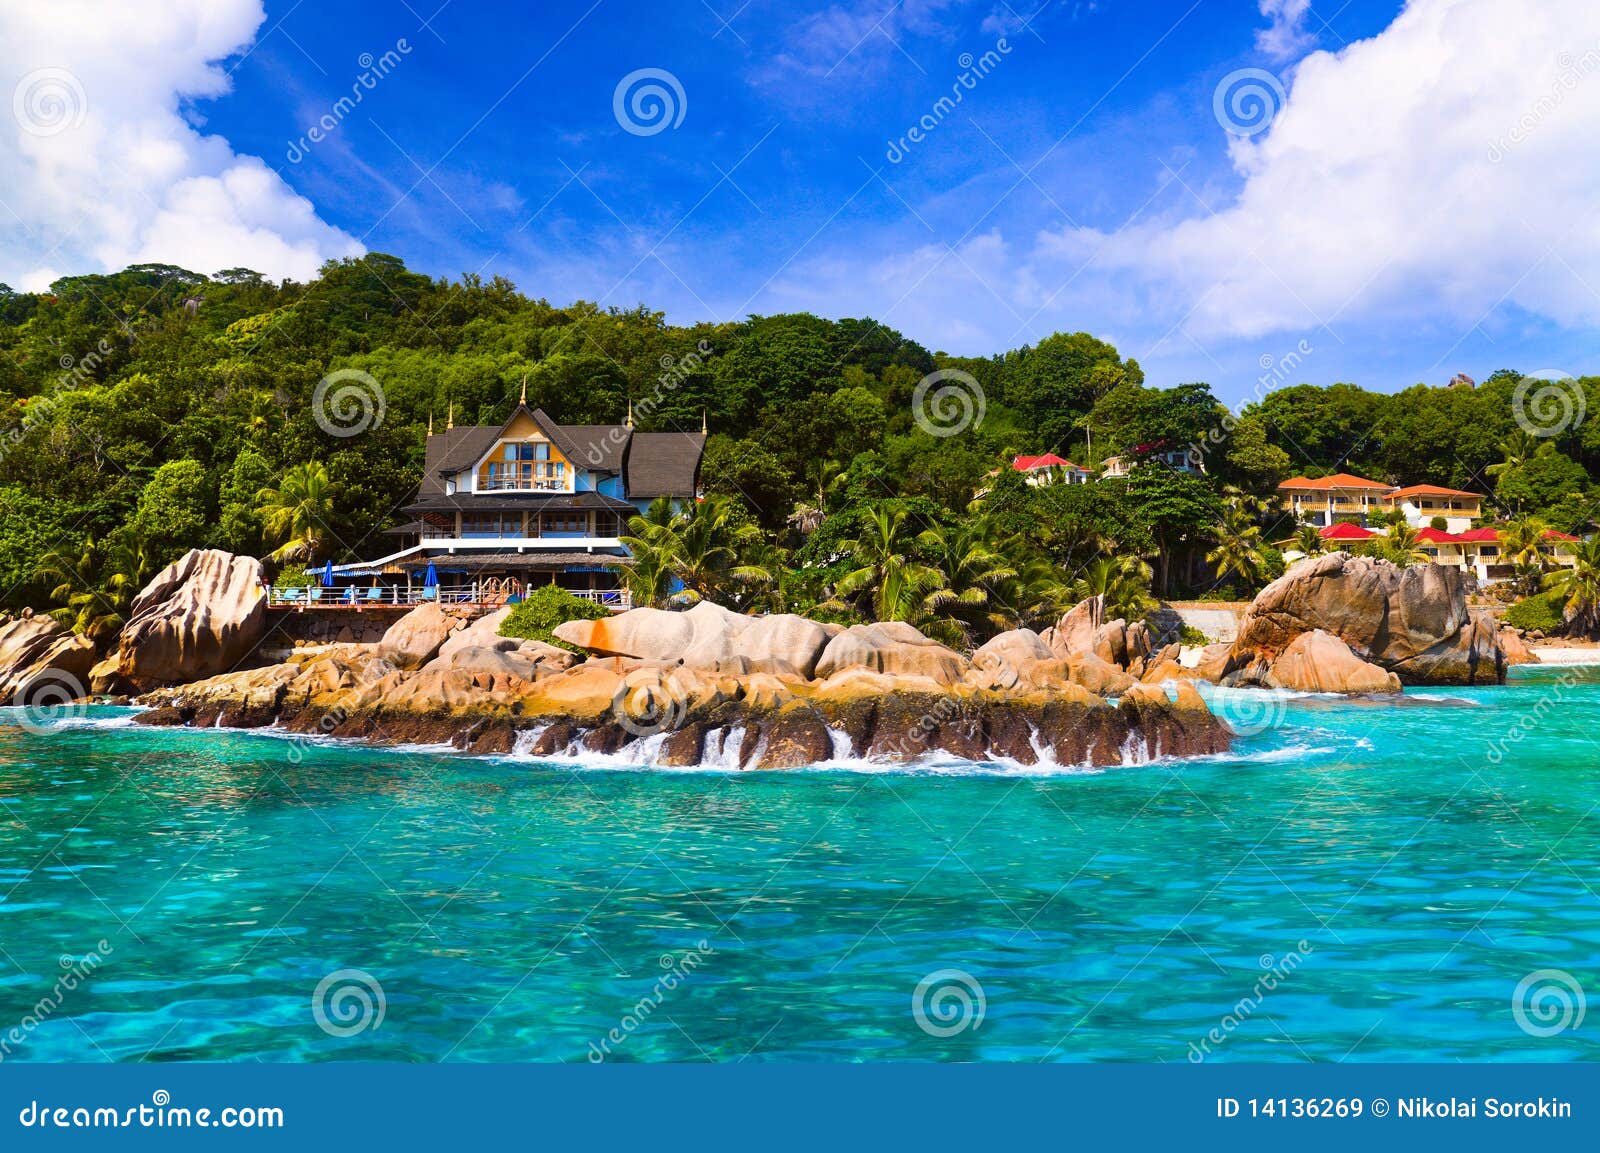 hotel at tropical beach, la digue, seychelles